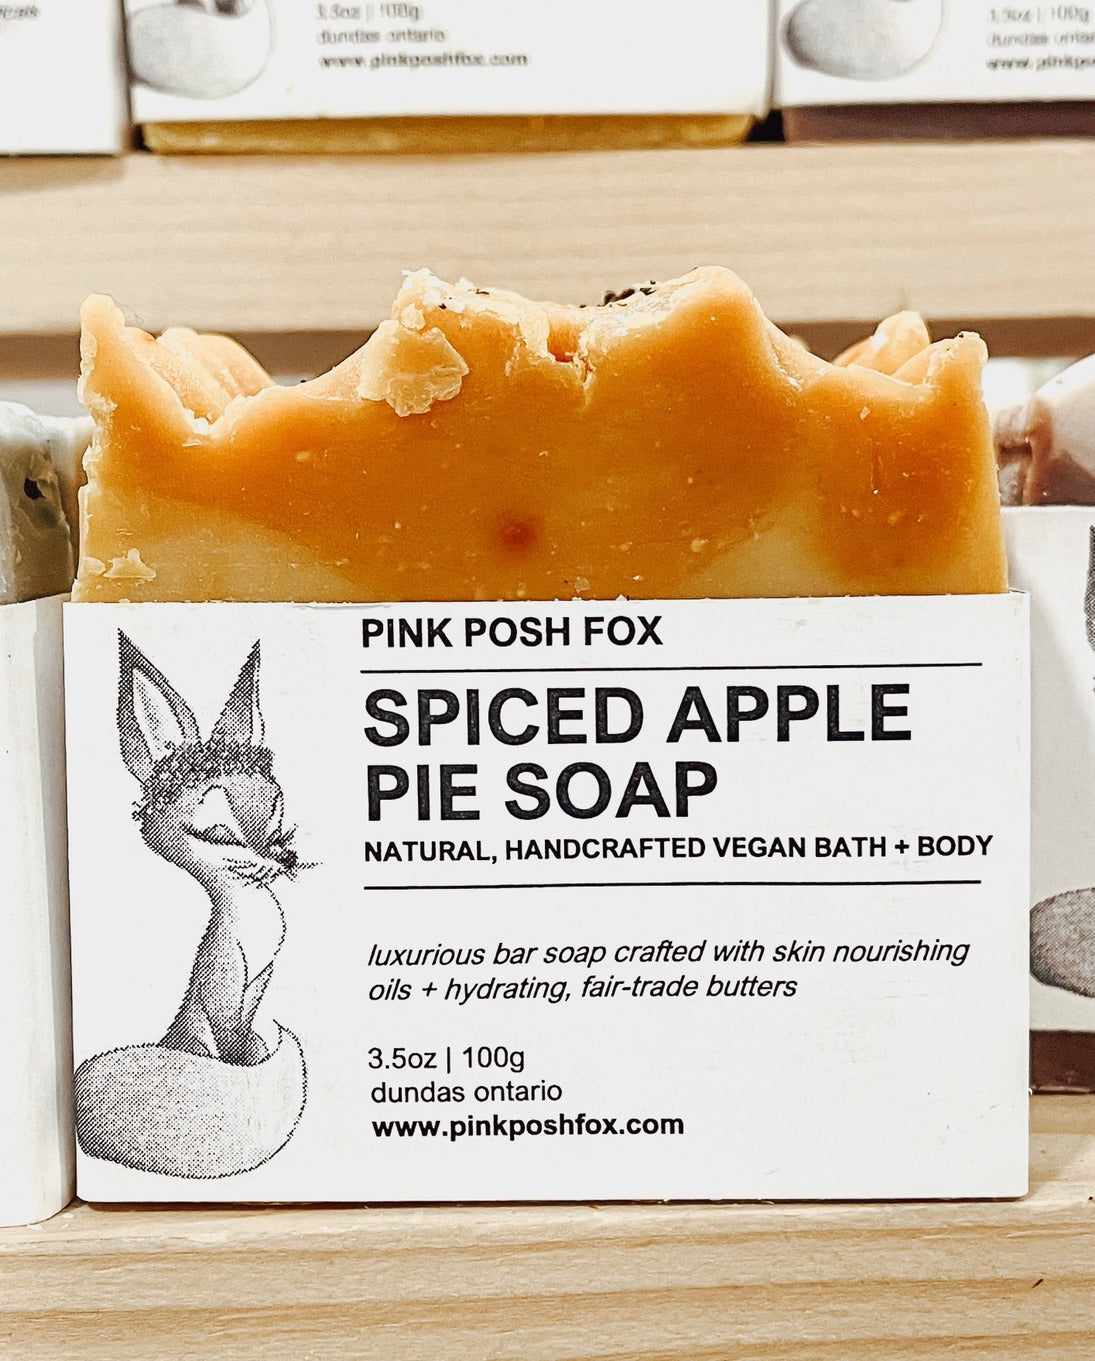 Spiced Apple Pie Soap - Pink Posh Fox